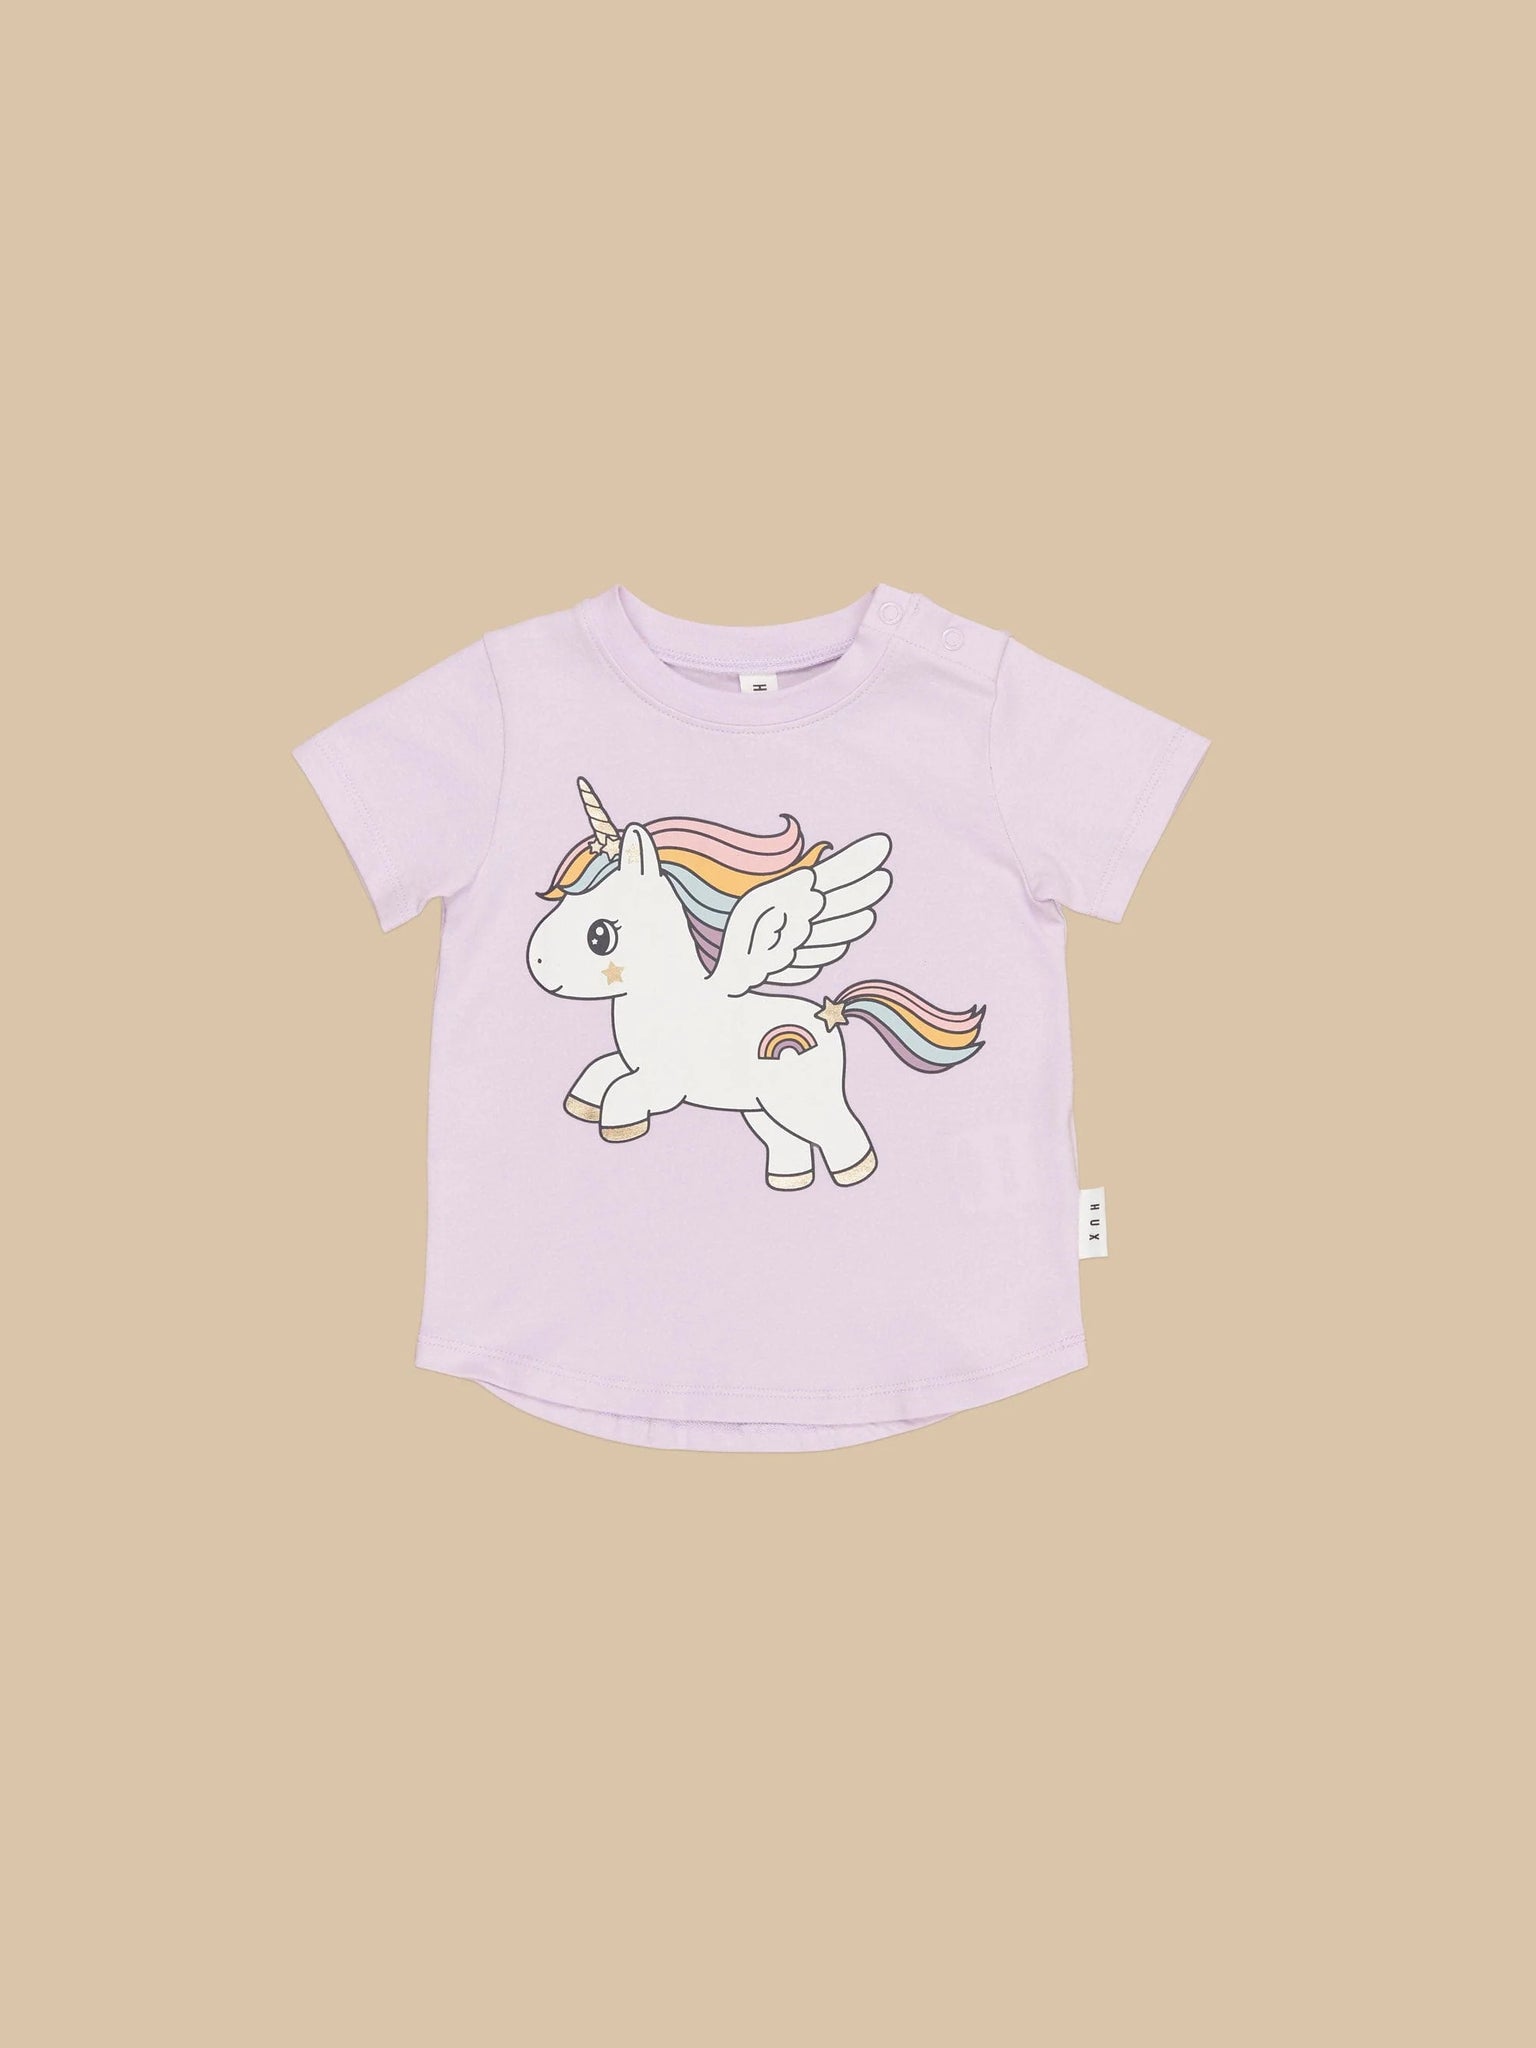 Magical Unicorn T-shirt.